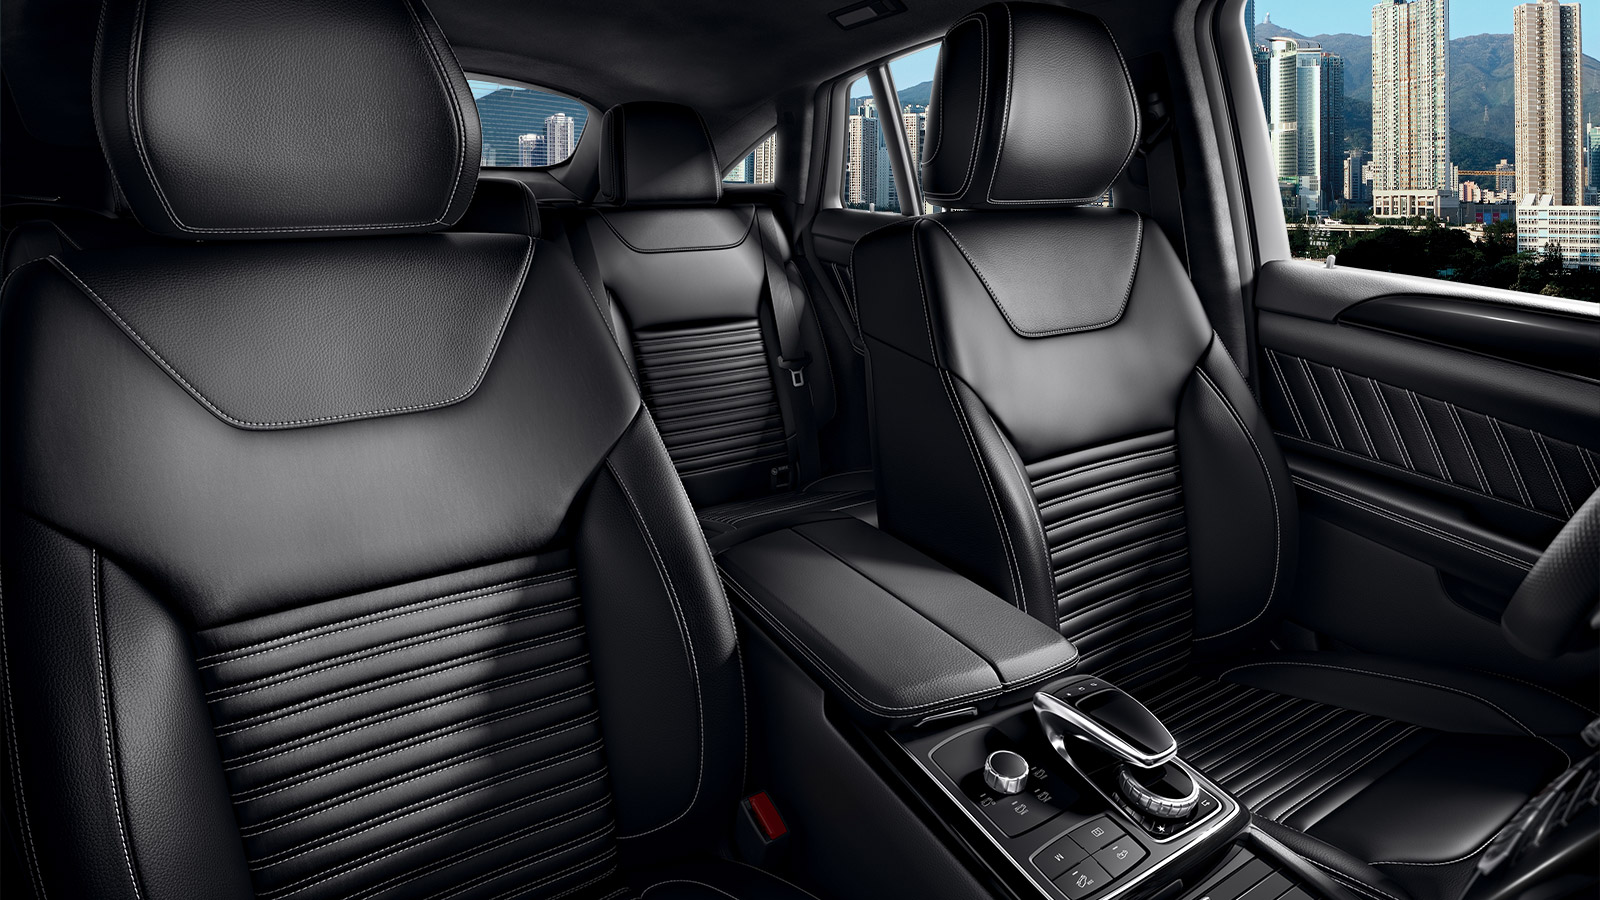 Mercedes Benz AMG GLE 450 interior seat view